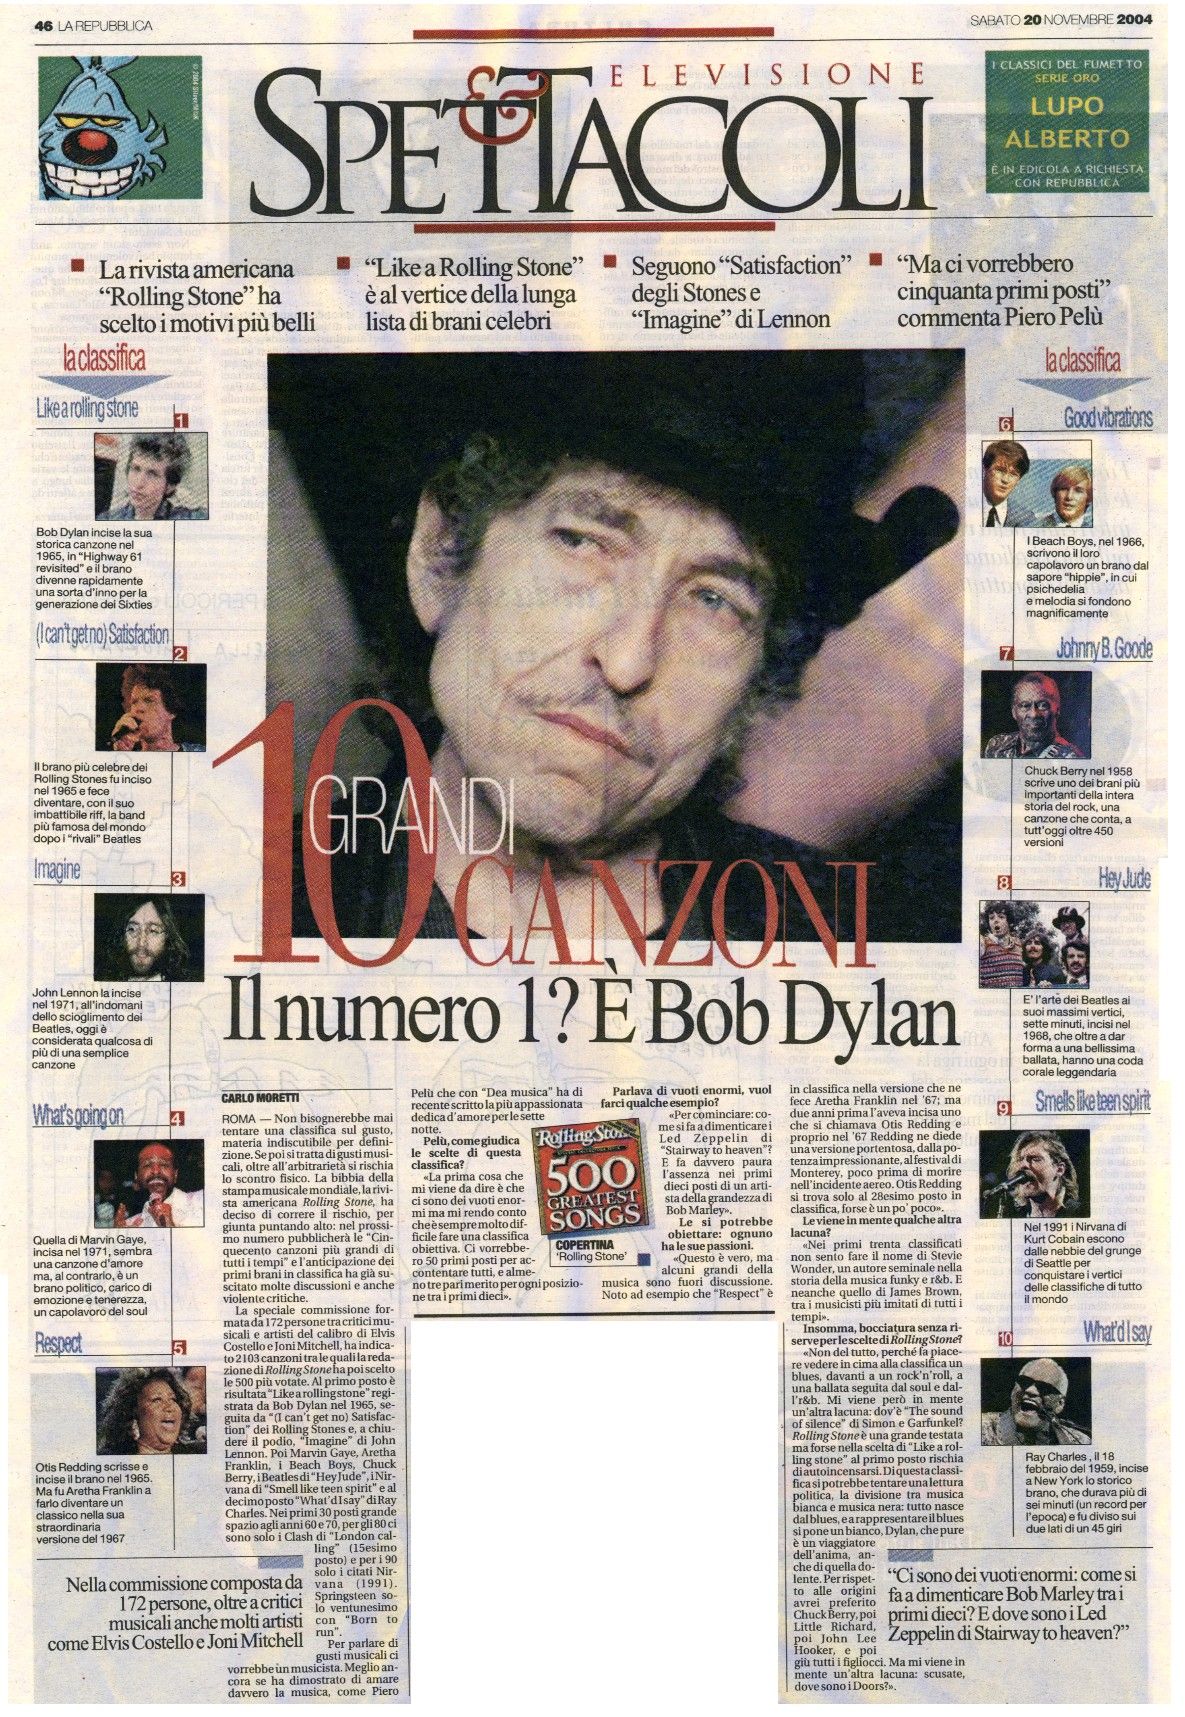 la repubblica 20 november 2004 Bob Dylan cover story